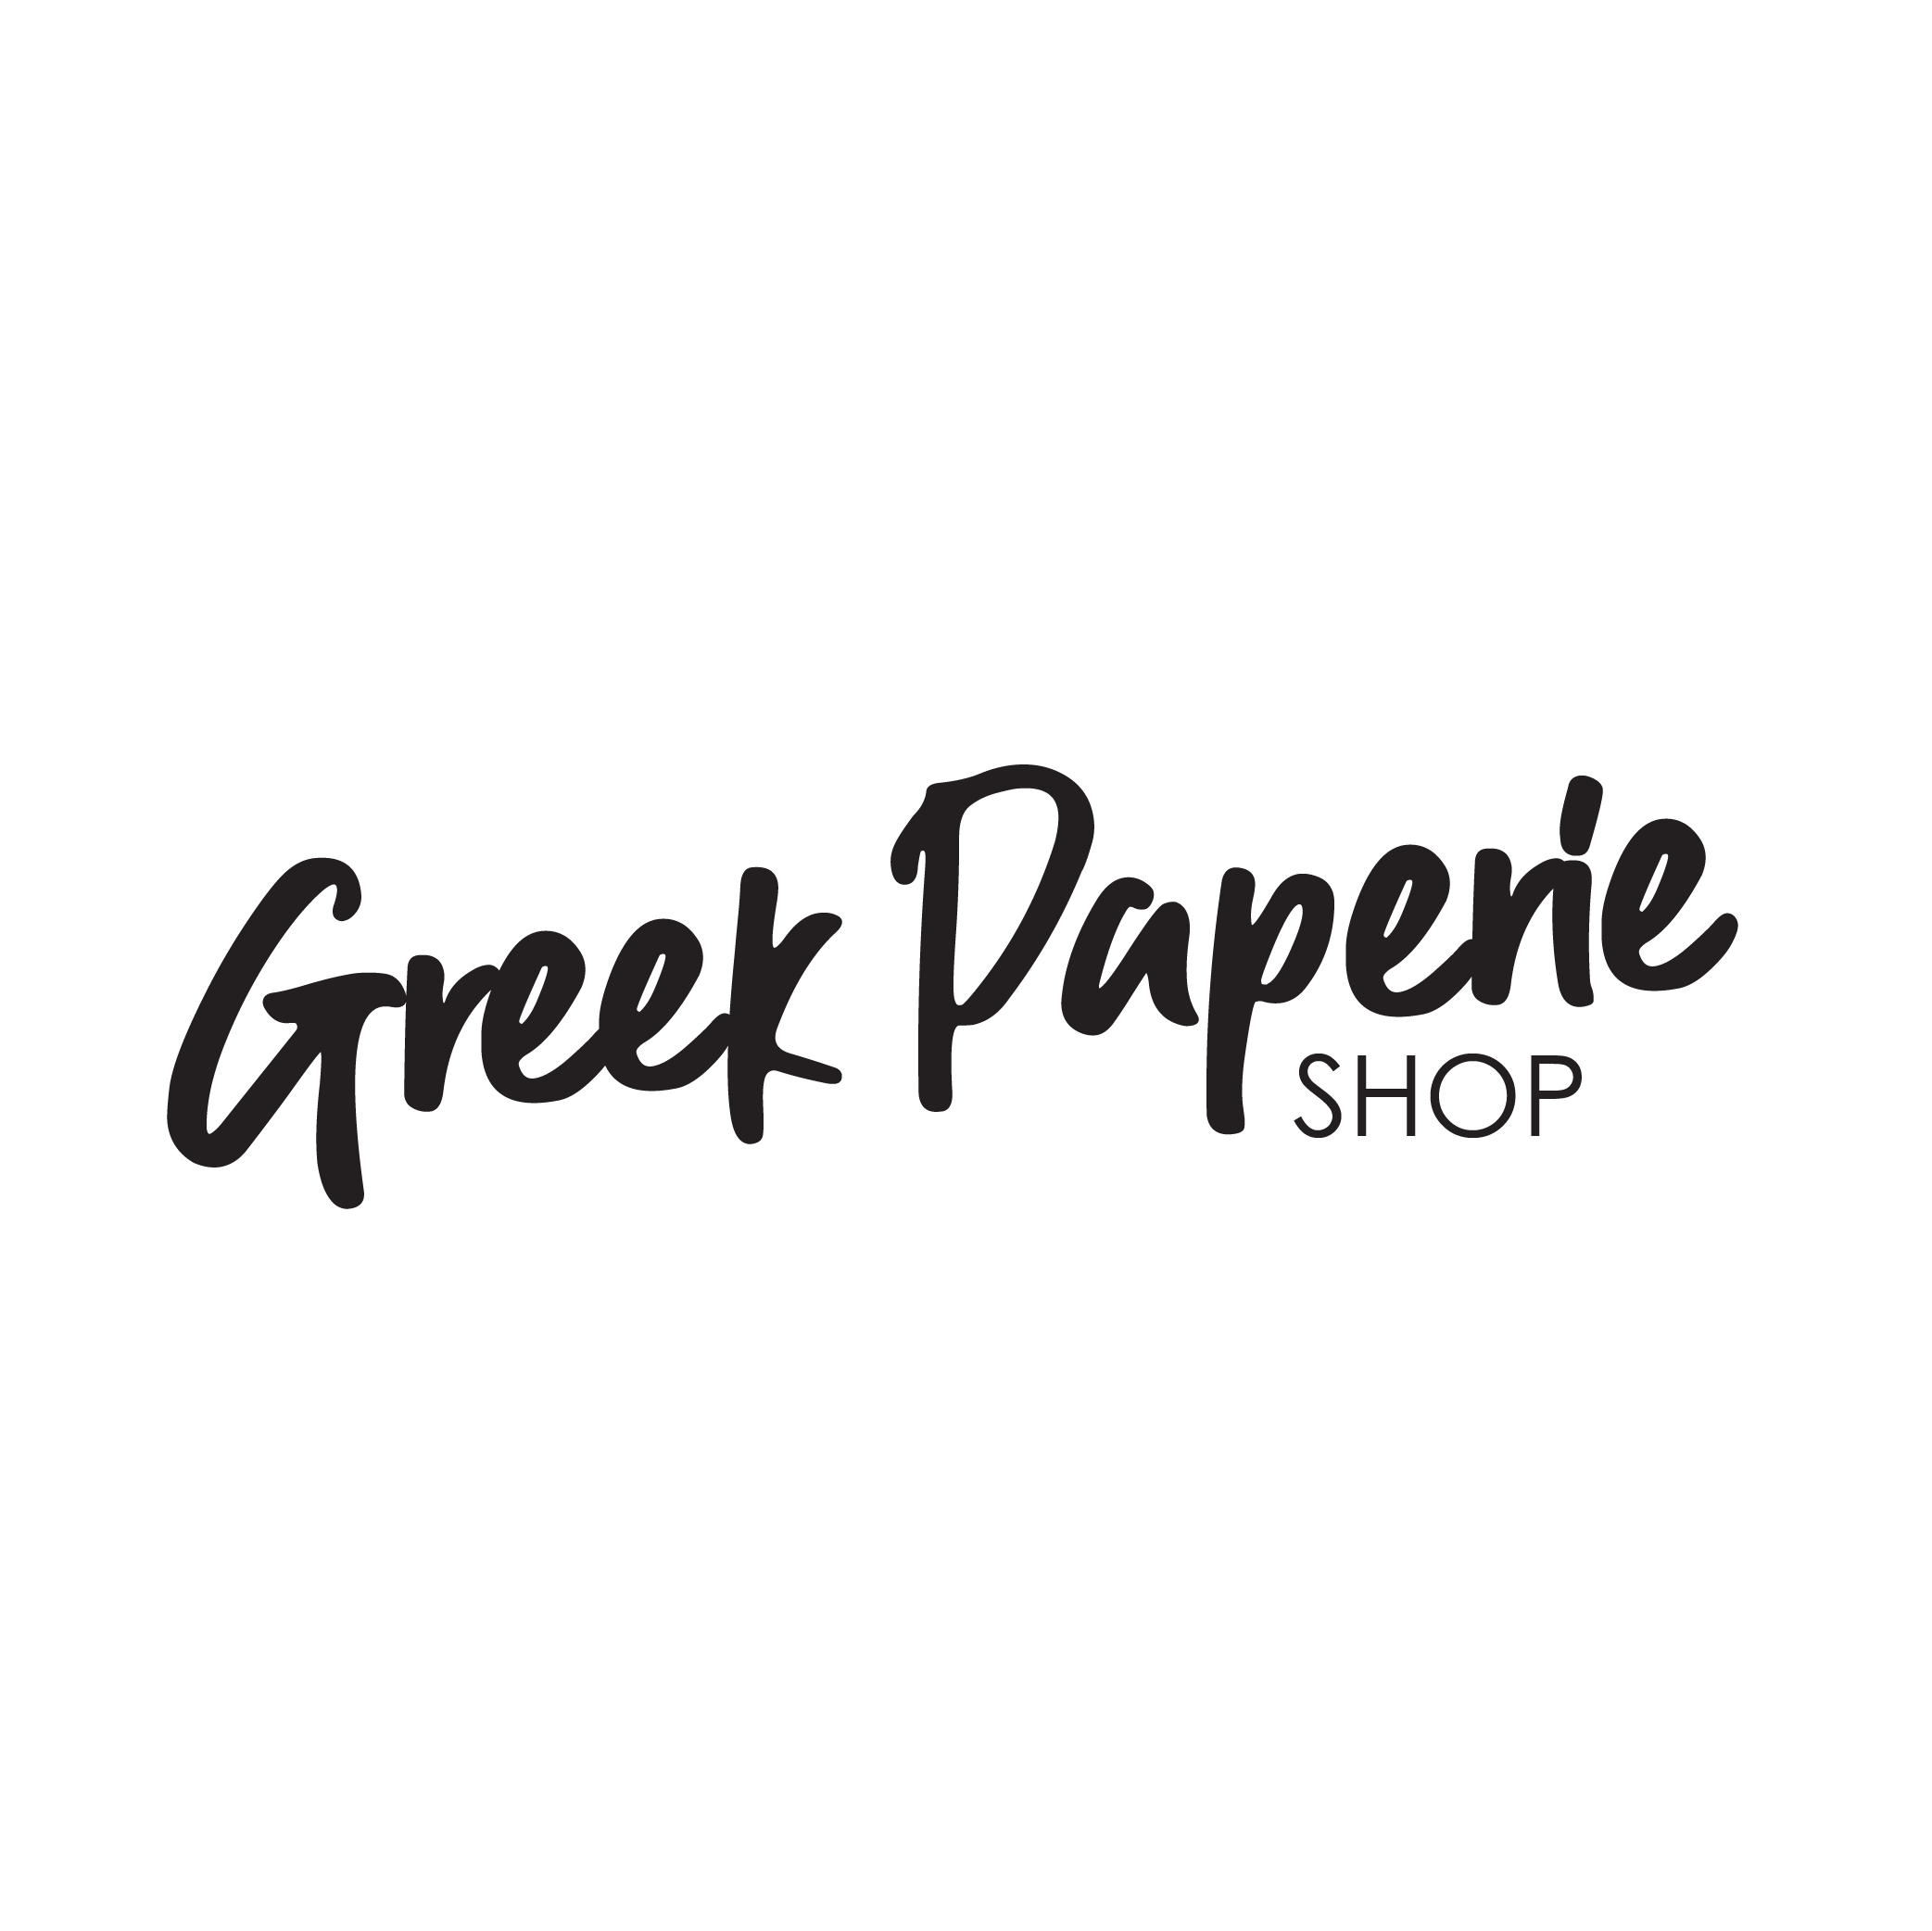 Greek Paperie Shop